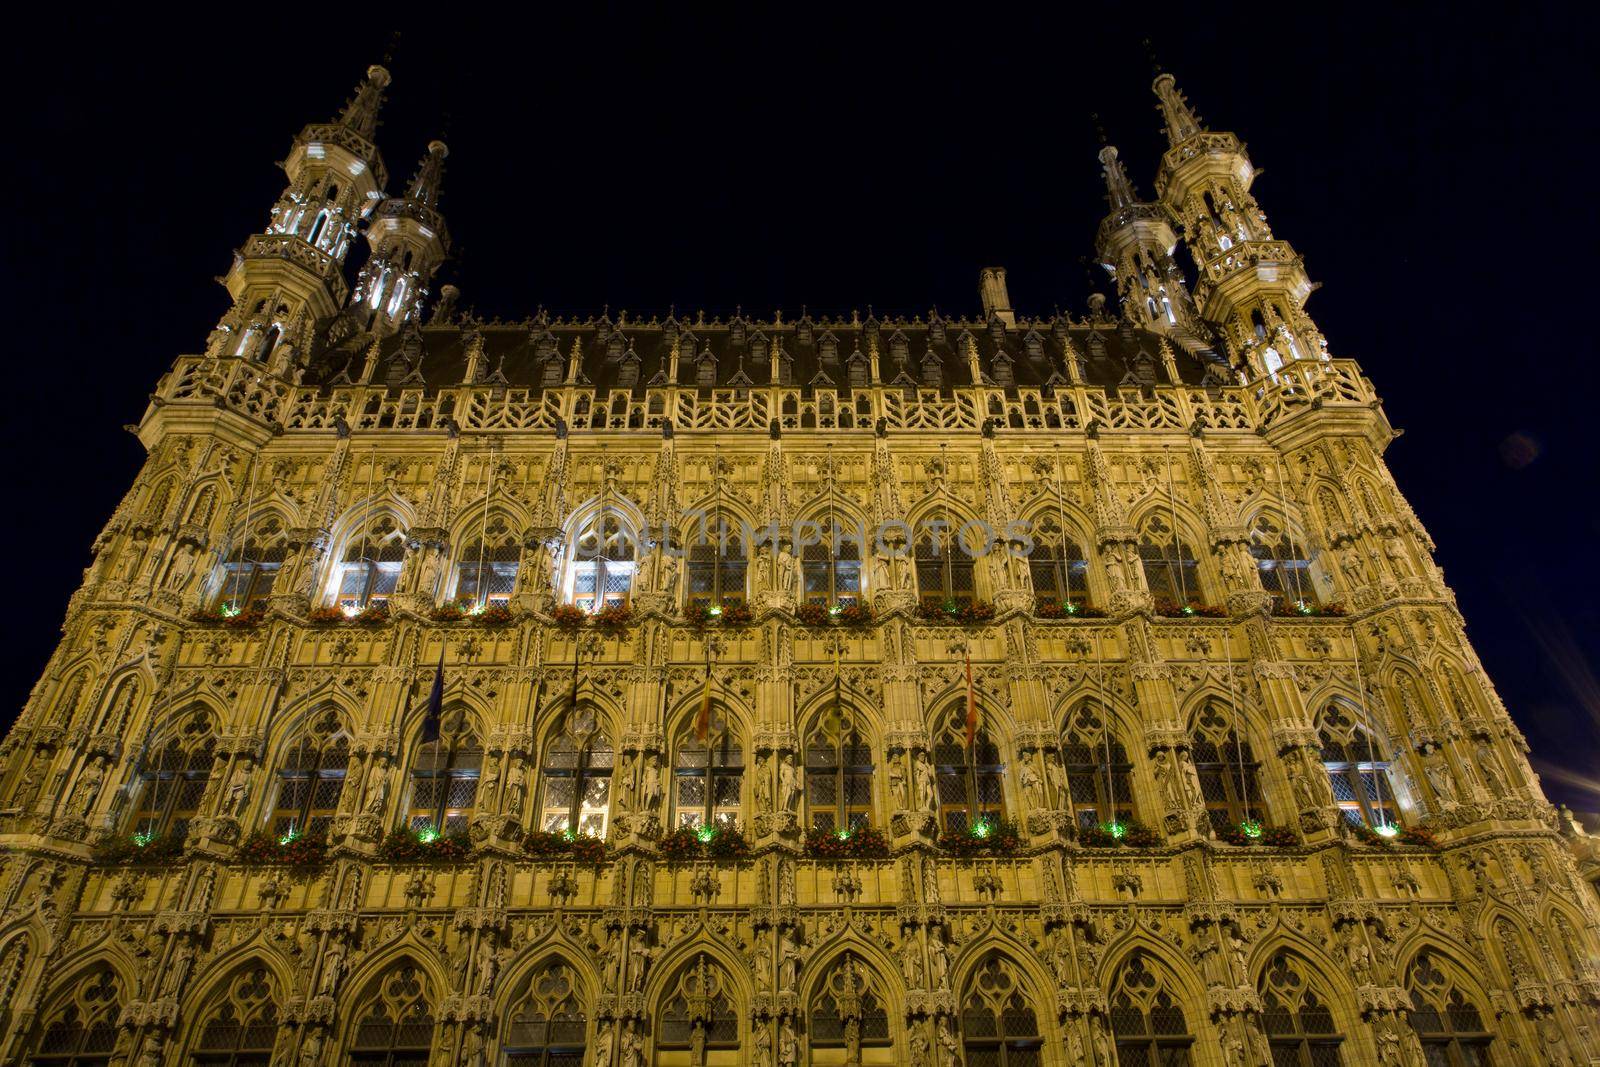 City Hall Leuven by Kartouchken